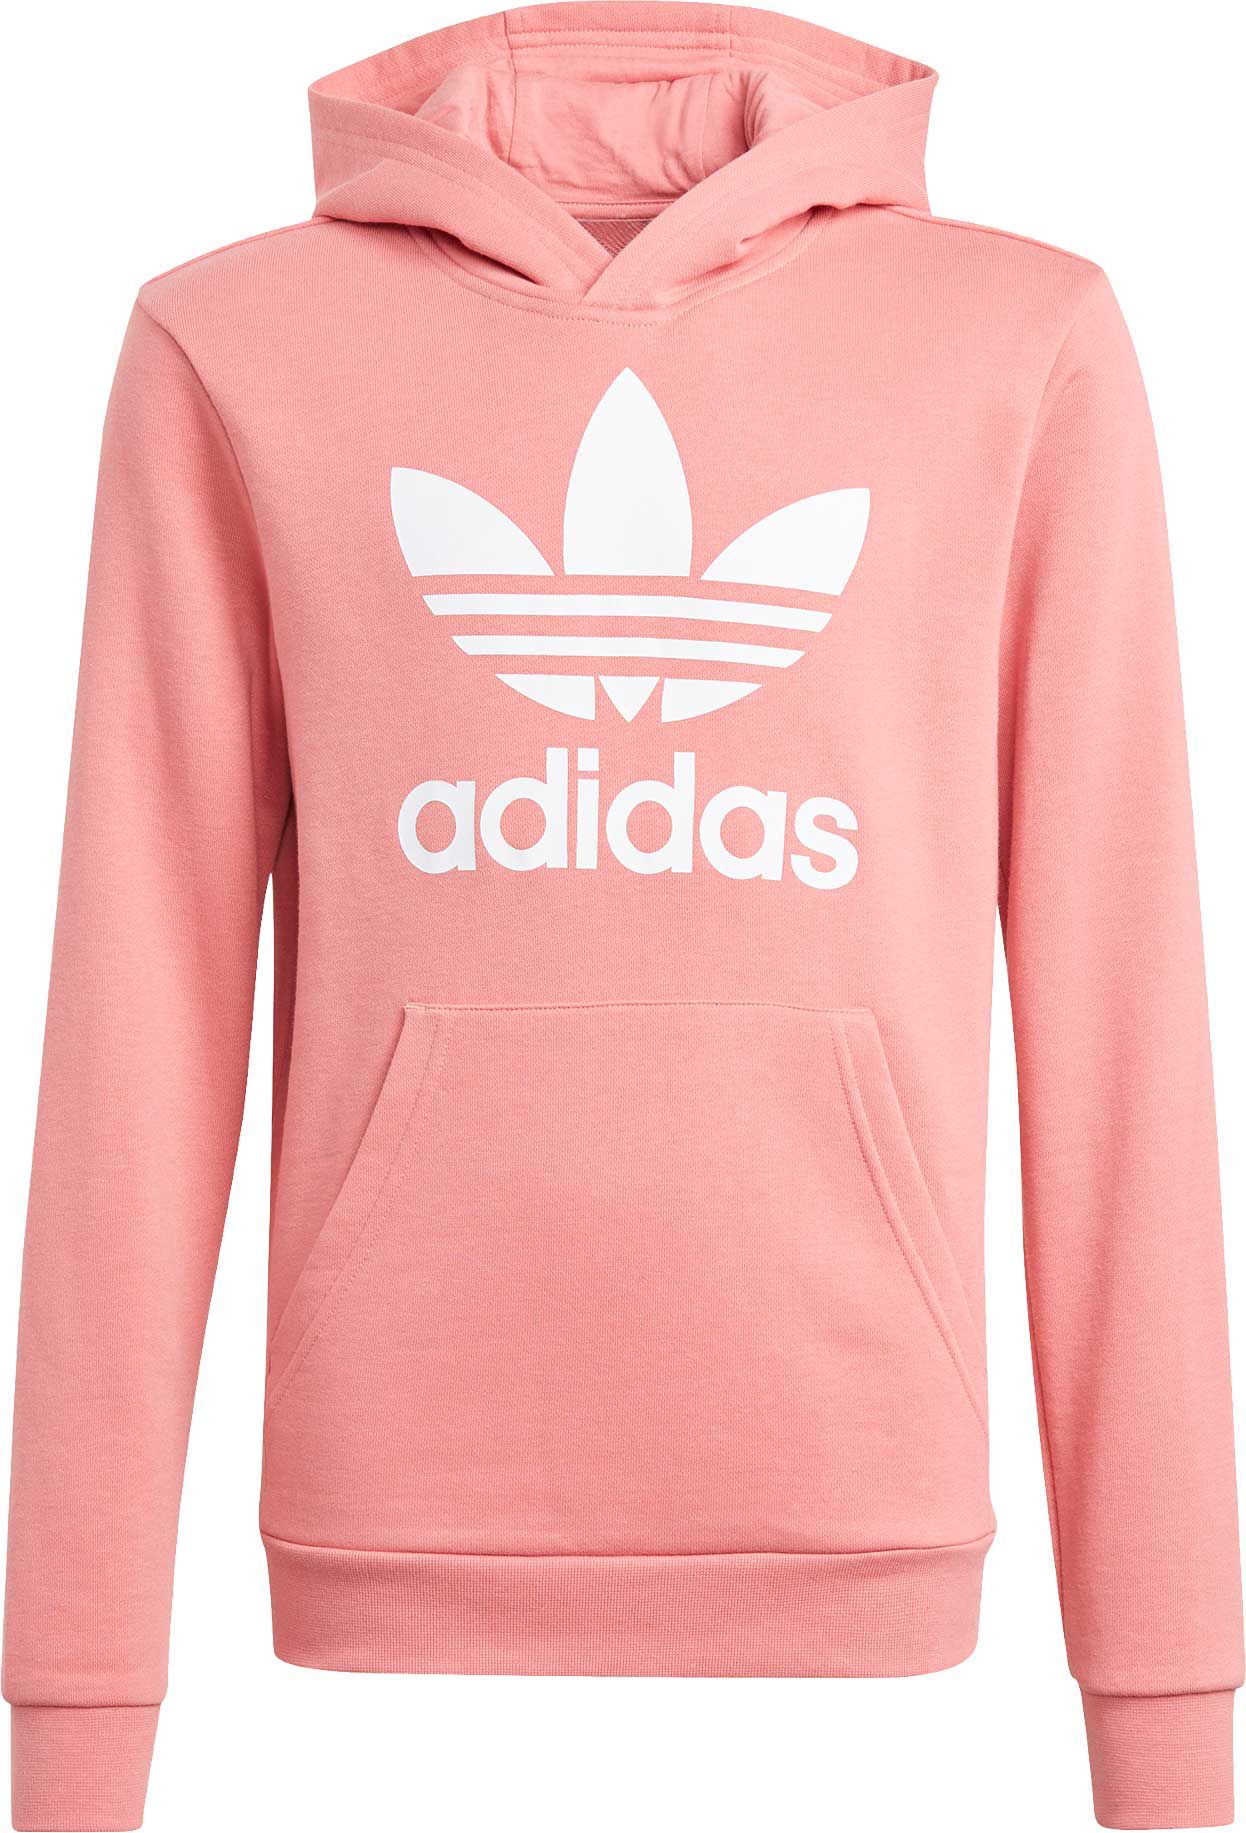 adidas women's pink sweatshirt